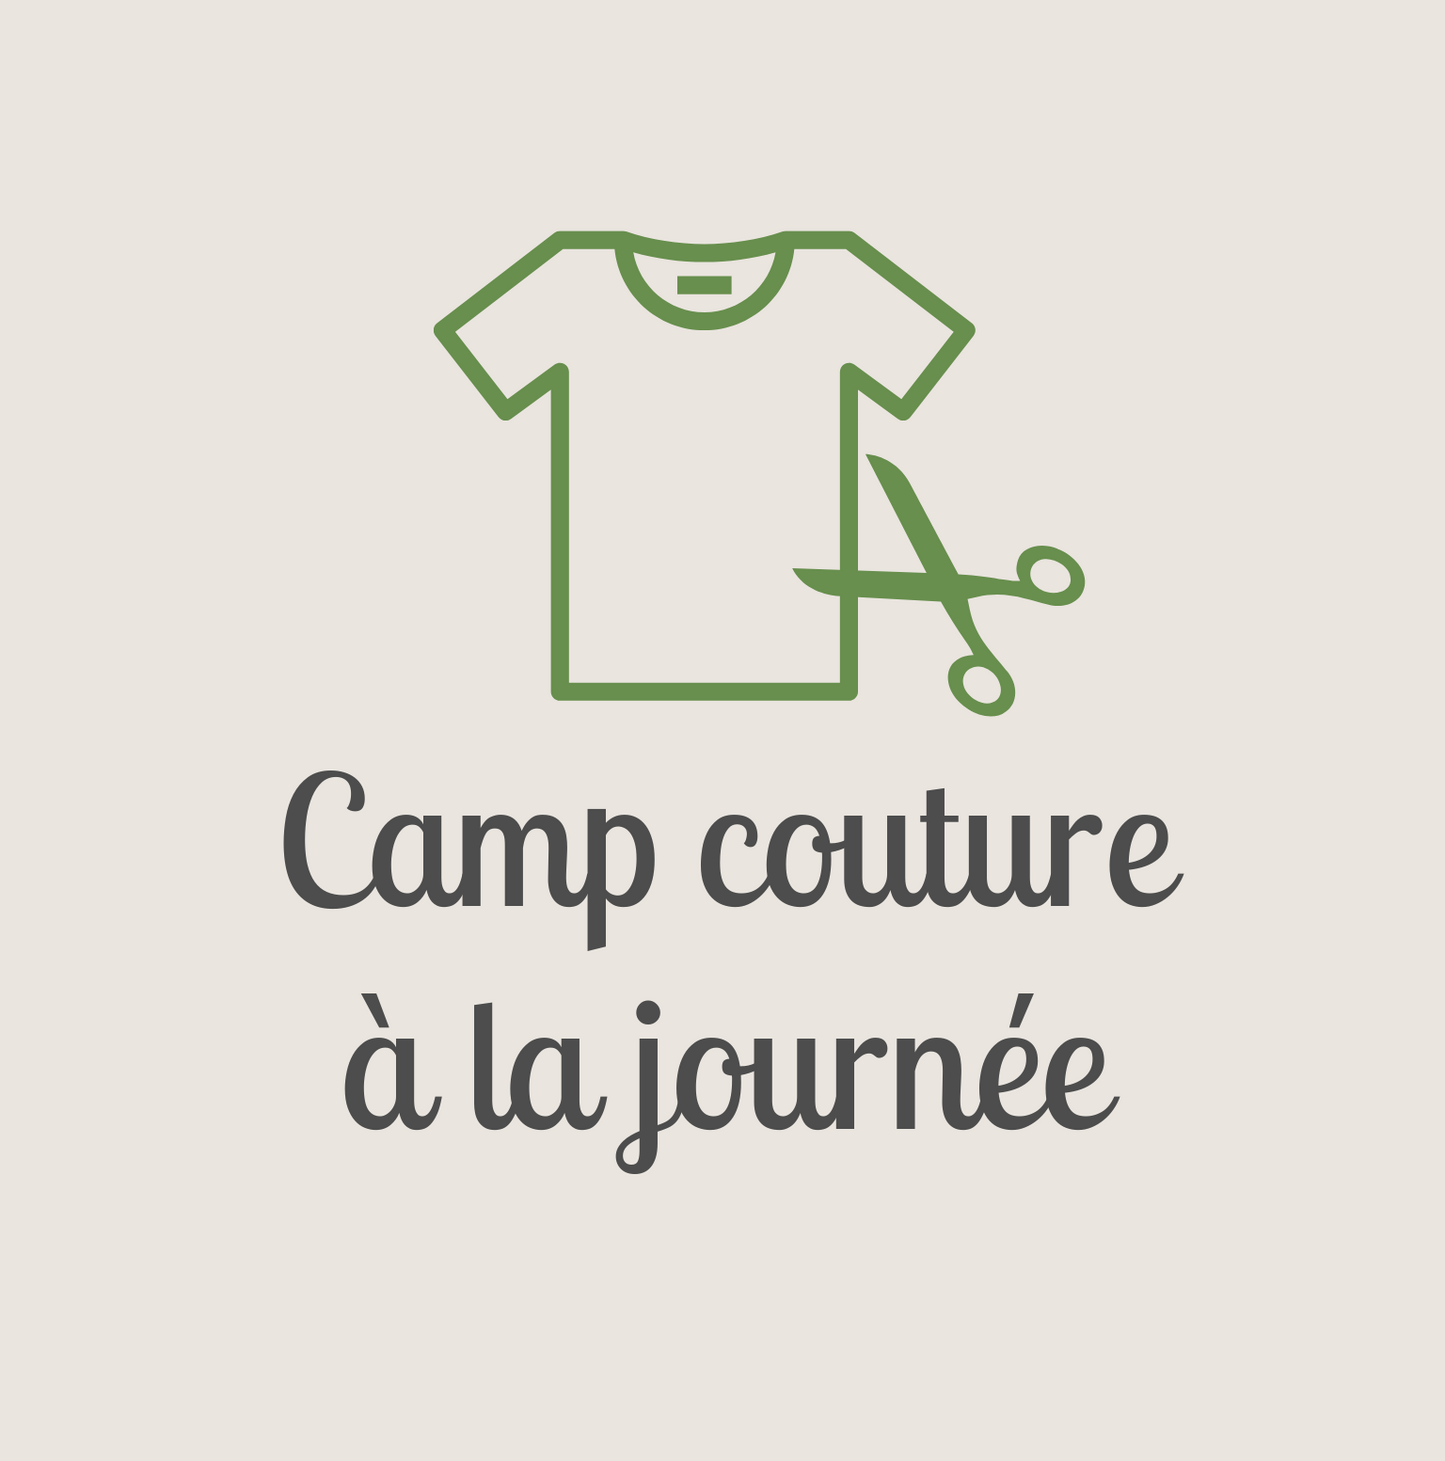 Camp couture - Journée